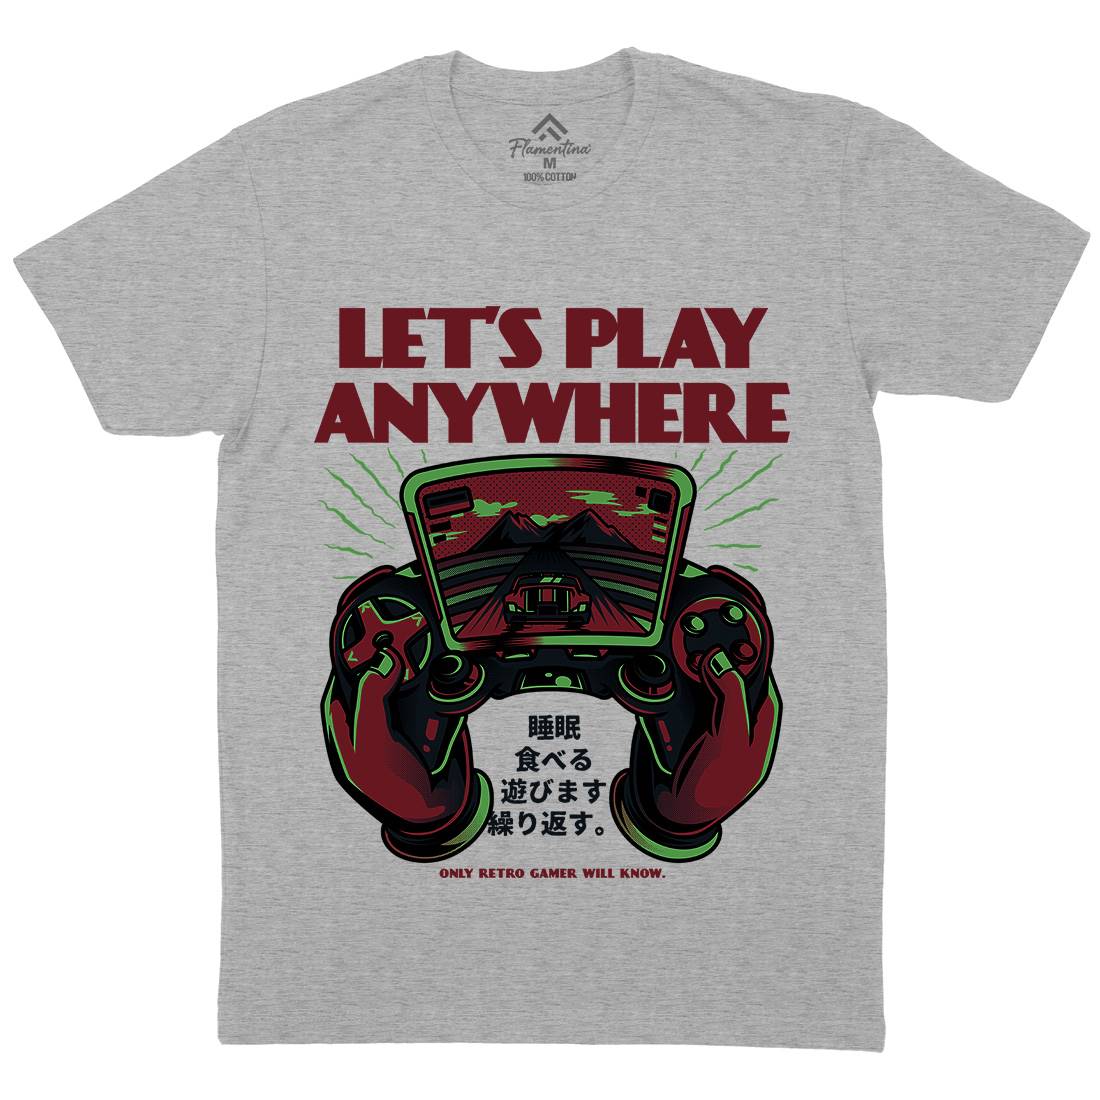 Lets Play Anywhere Mens Crew Neck T-Shirt Geek D634